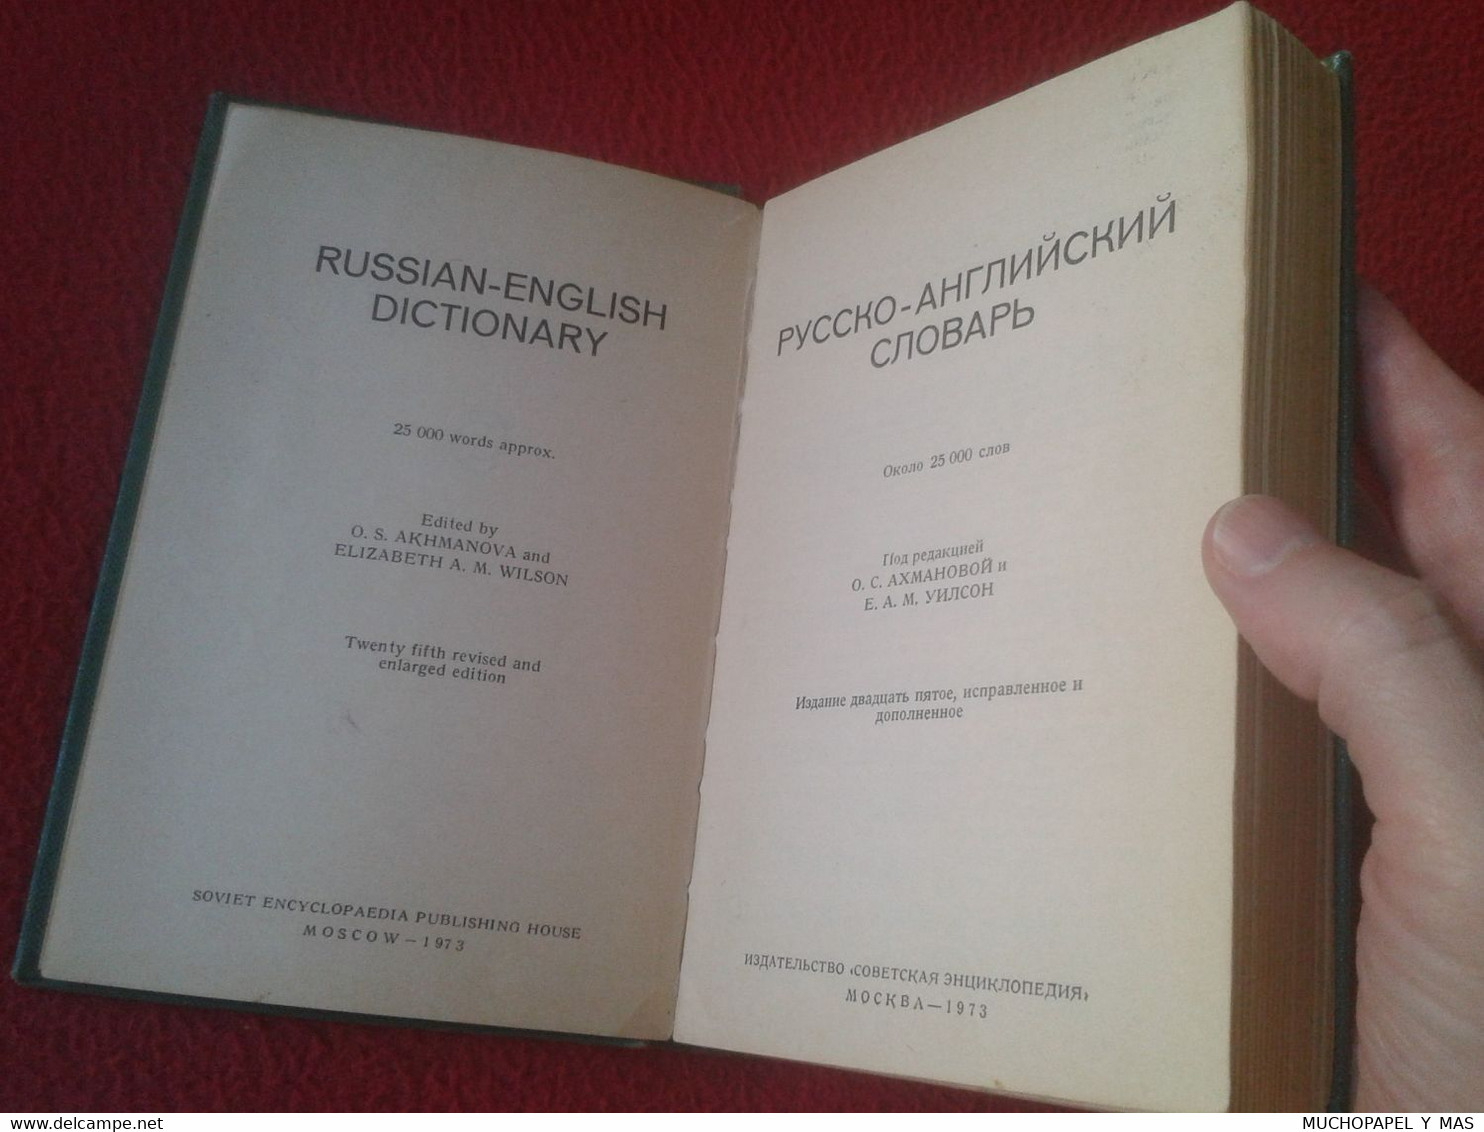 DICCIONARIO RUSO-INGLÉS RUSSIAN-ENGLISH OLD DICTIONARY 1973 O. S. AKHMANOVA ELIZABETH A. M. WILSON SOVIET ENCYCLOPAEDIA